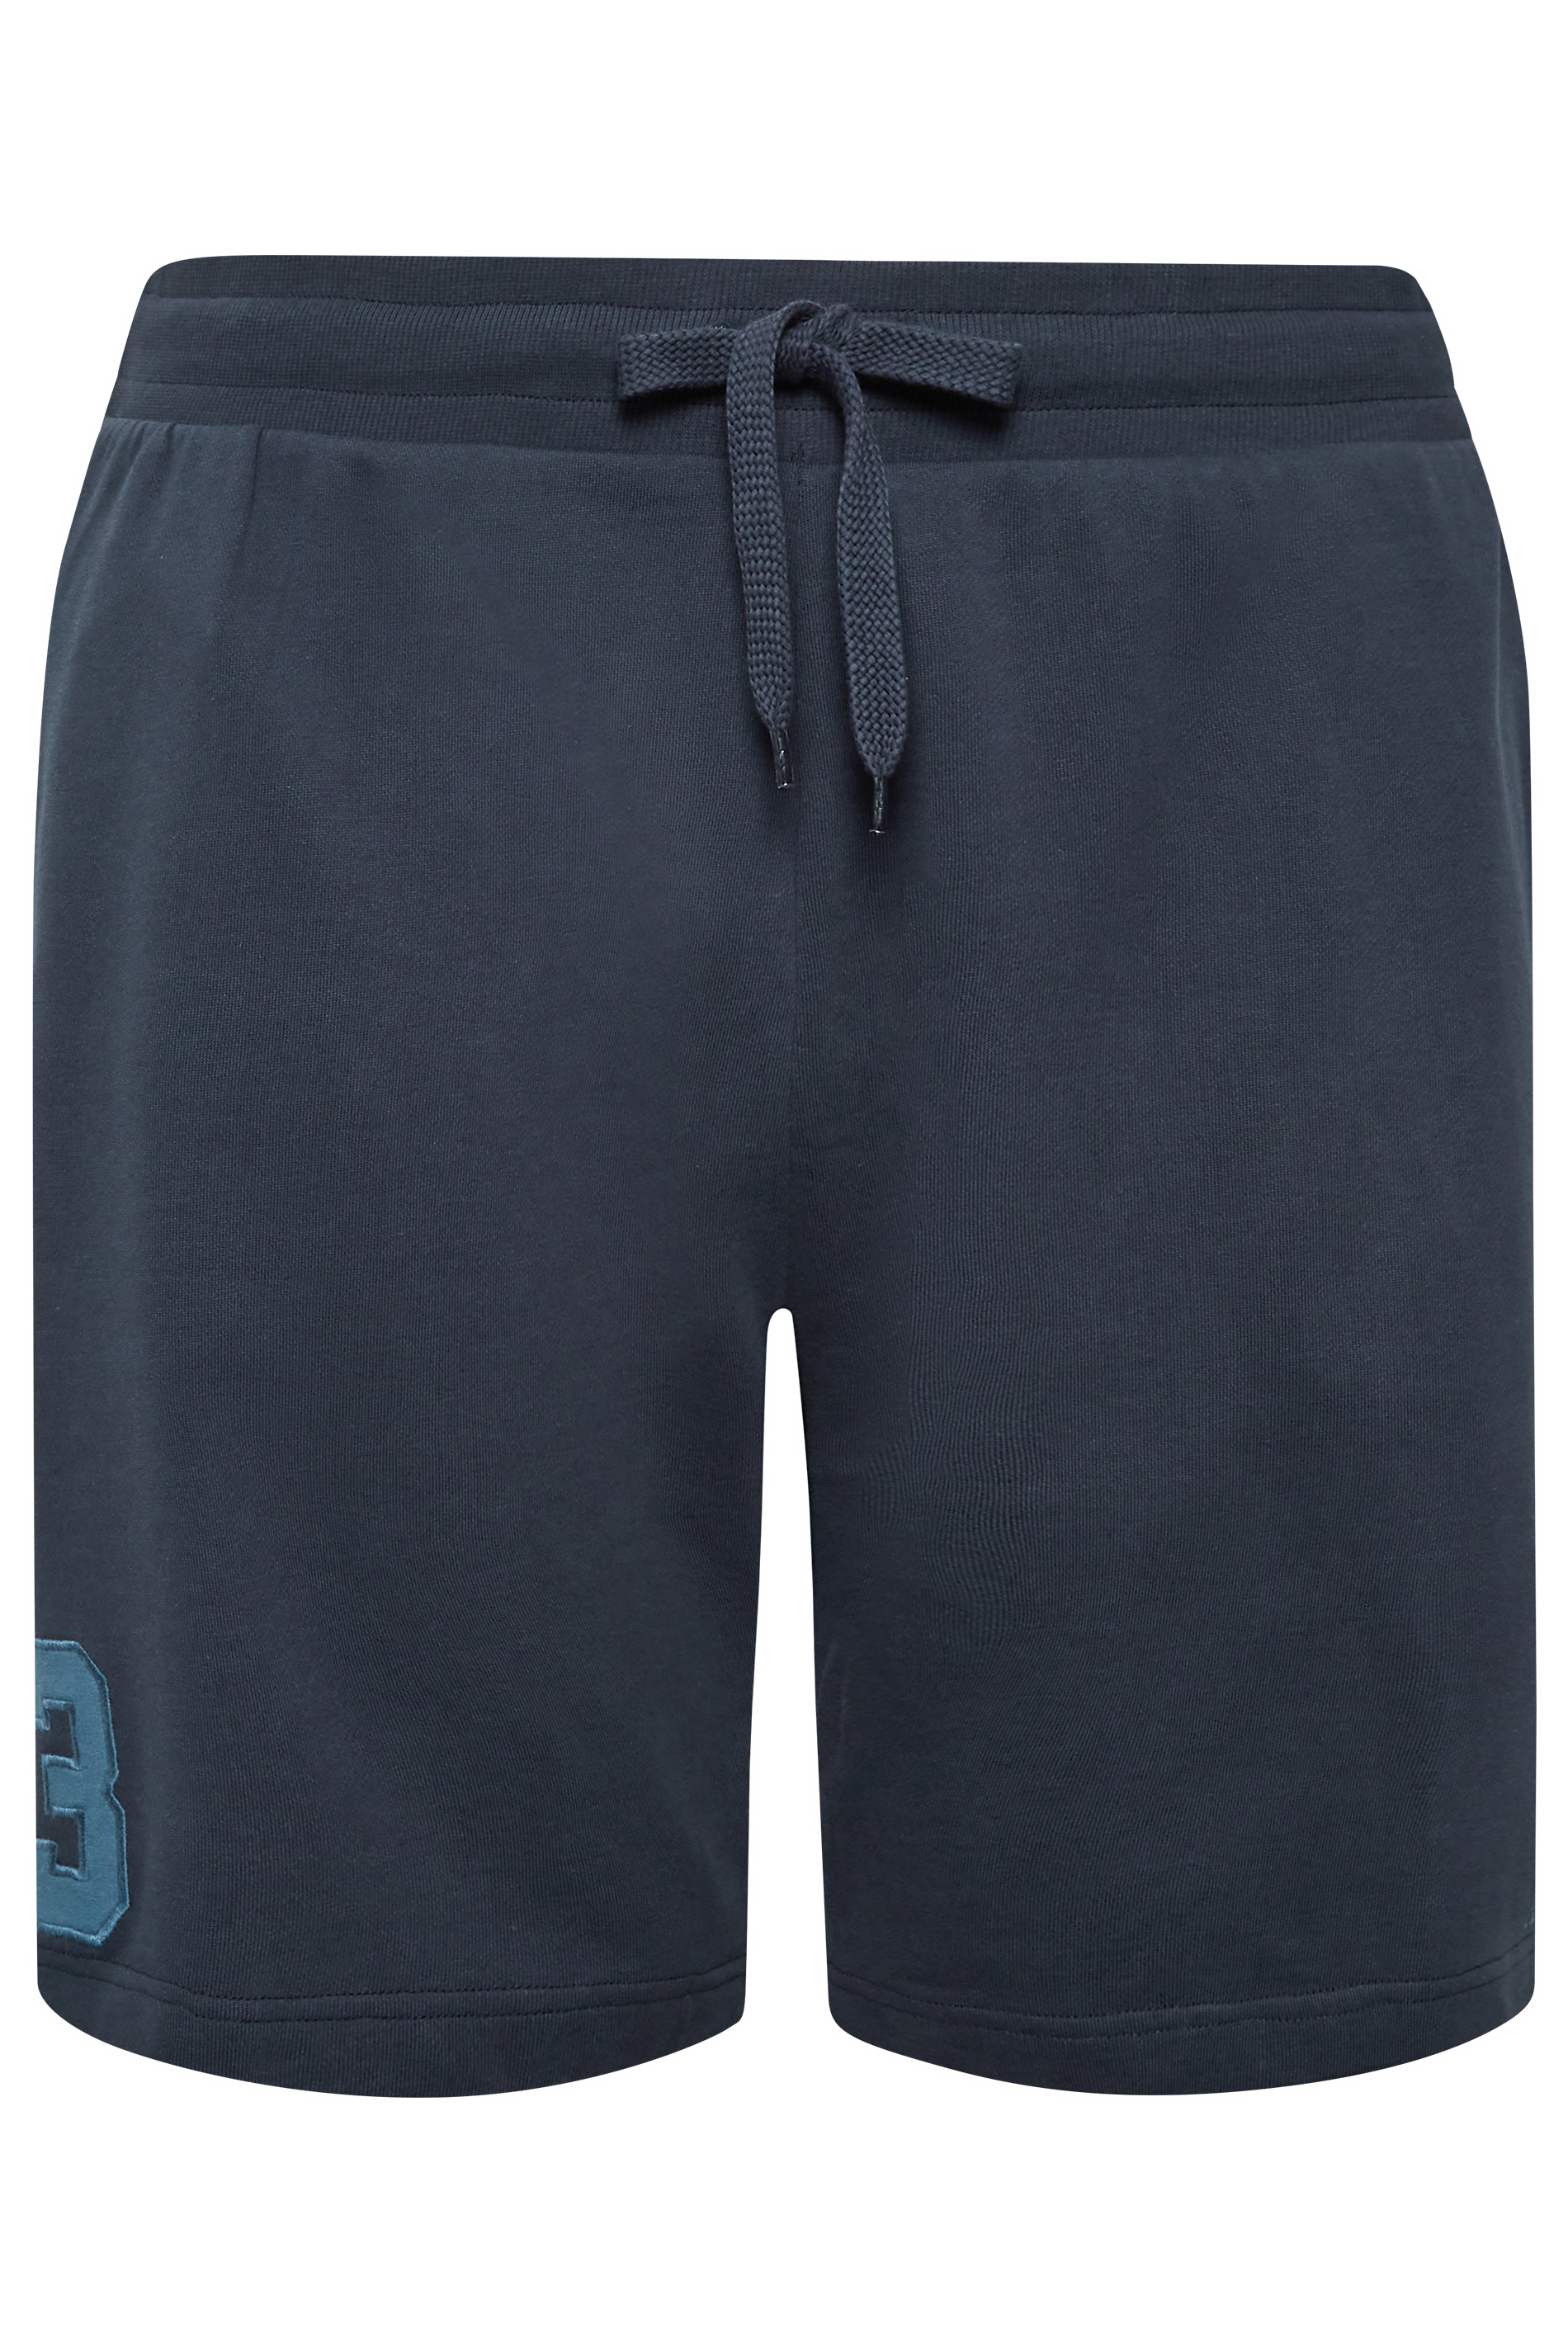 U.S. POLO ASSN. Big & Tall Navy Blue Jersey Shorts | BadRhino  3